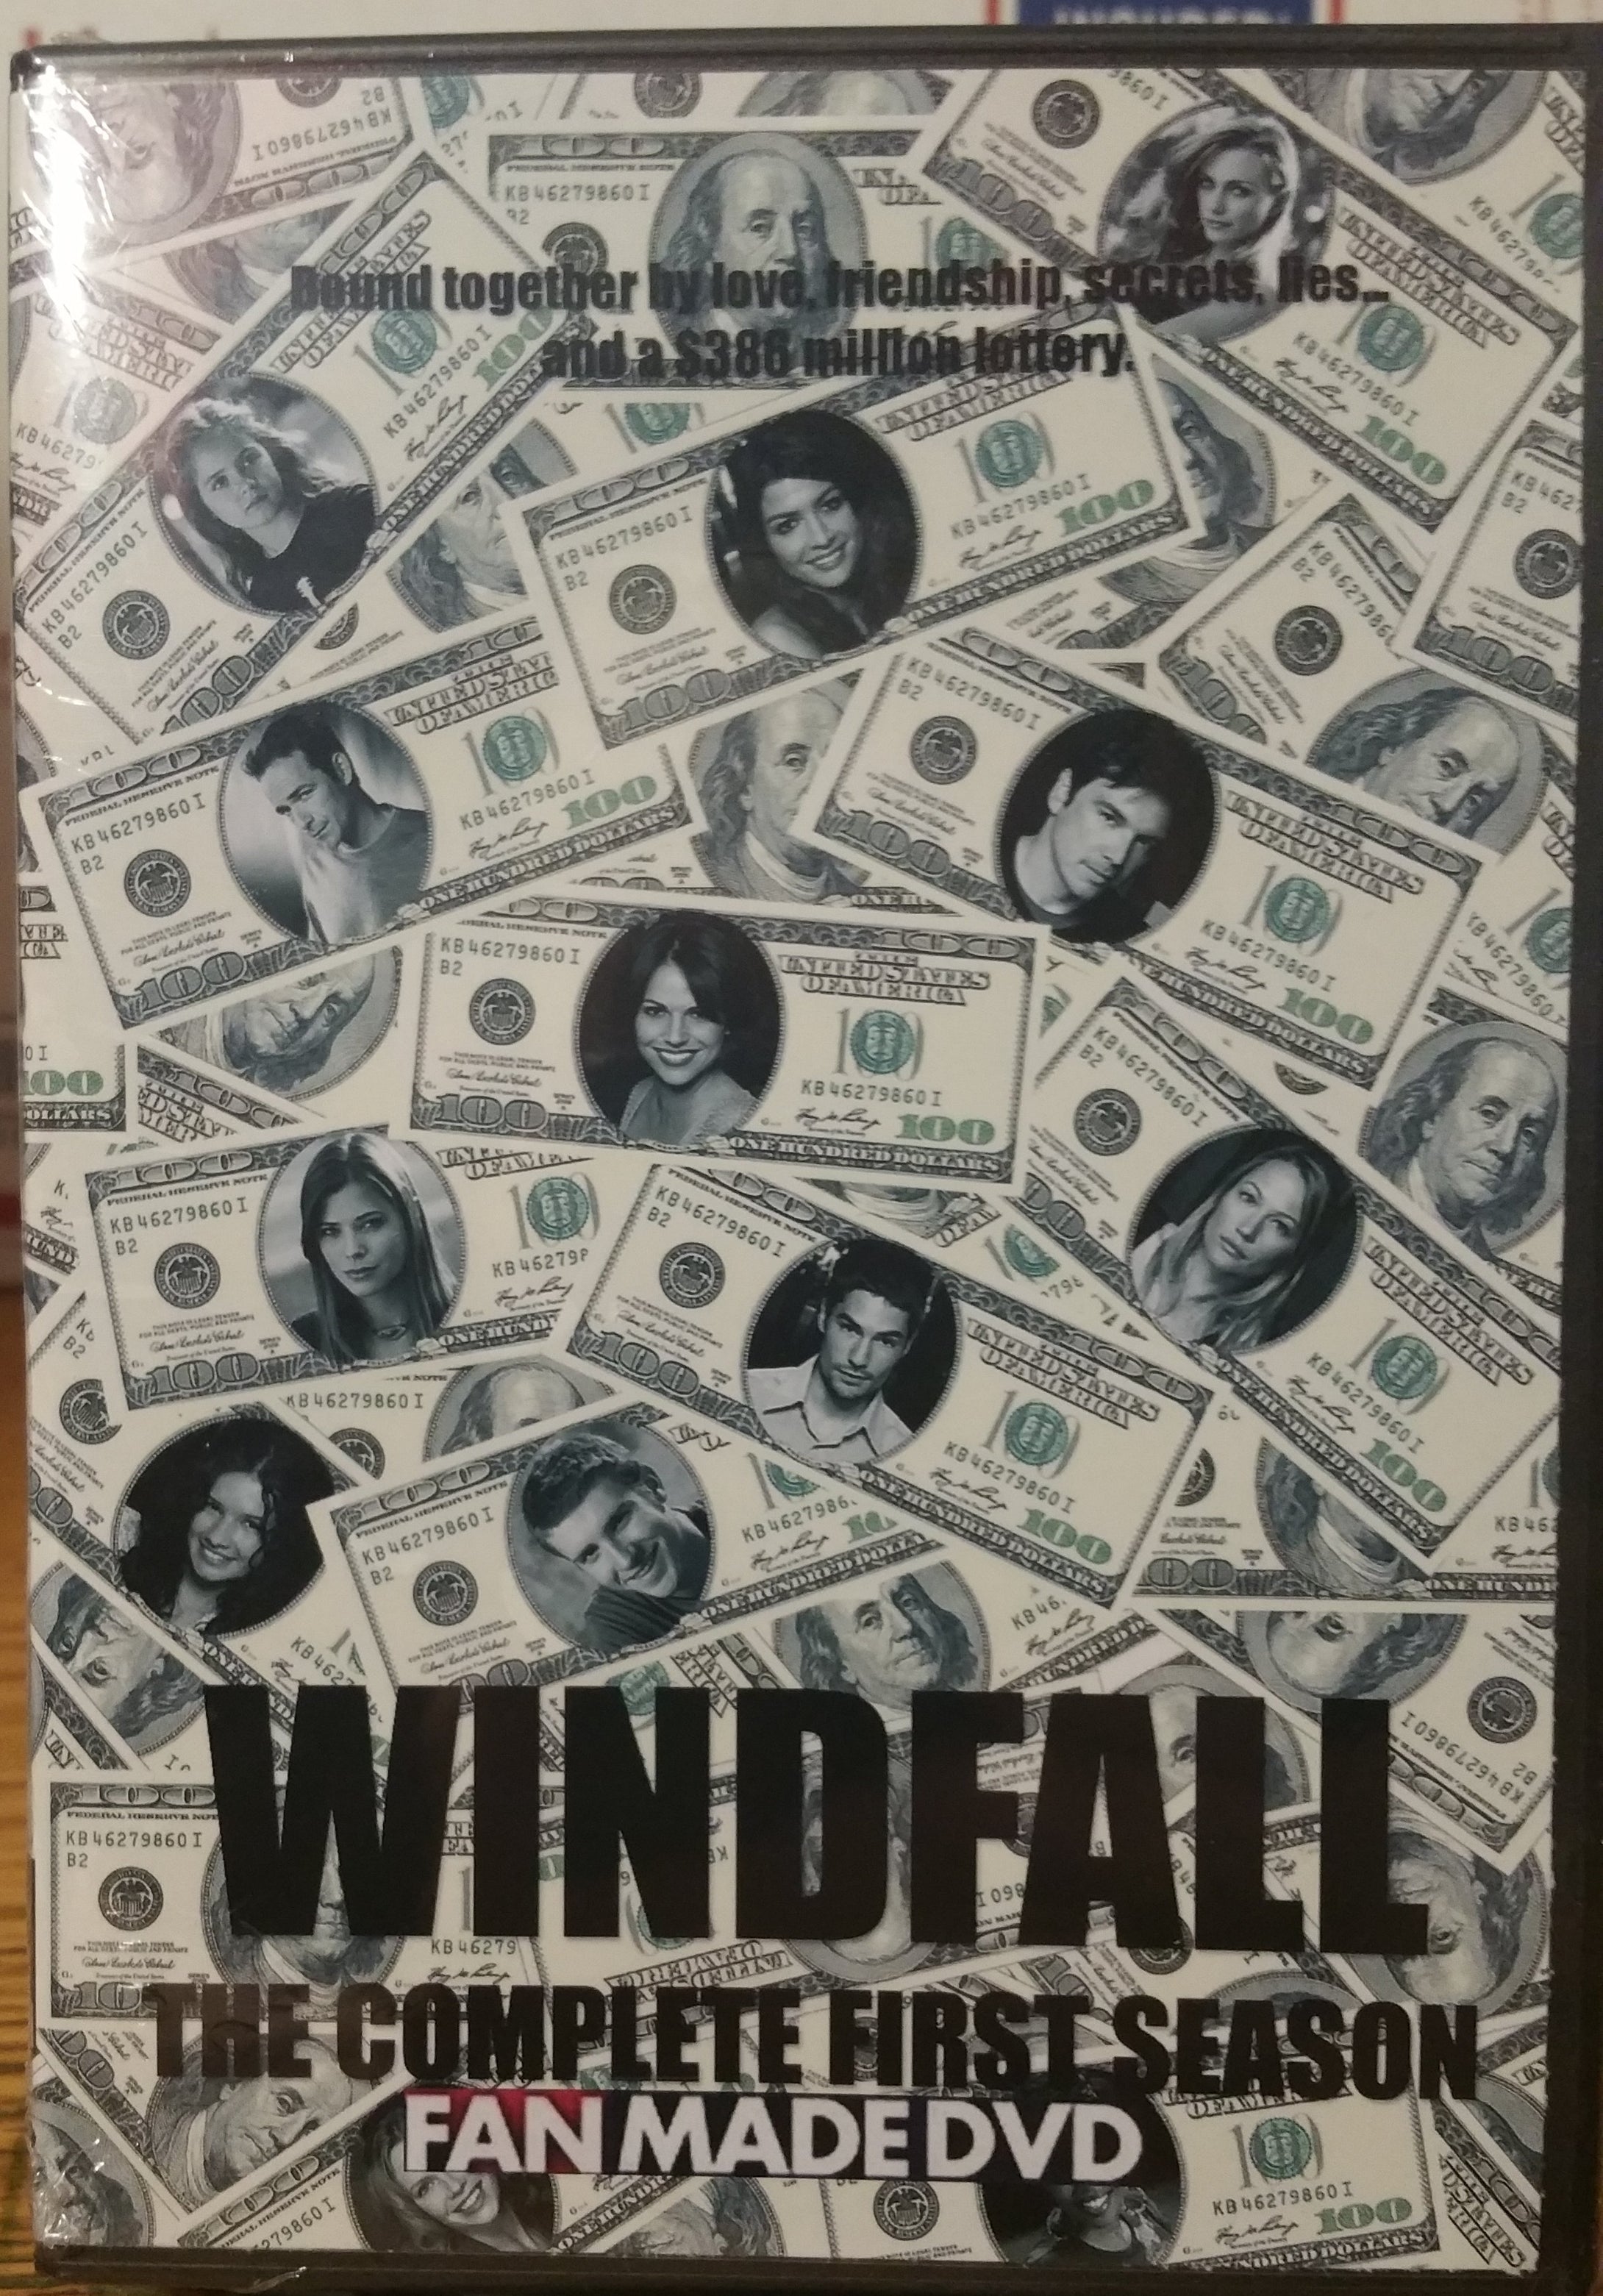 Windfall 2006 THE COMPLETE TV SERIES ON DVD Luke Perry Peyton List Lana Parrilla Emma Prescott